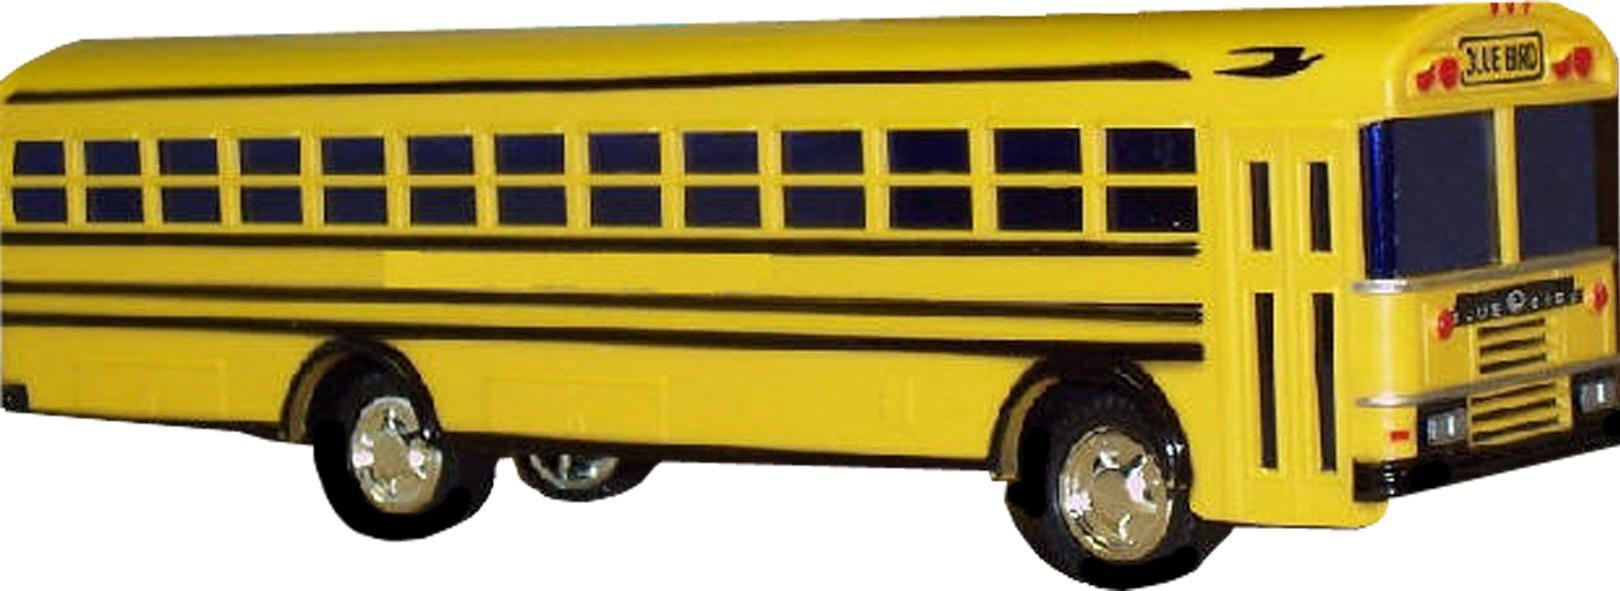 Blue Bird Bank Logo - Blue Bird Model School Bus| model,bus,bus,bank,bus,bank,promotion ...